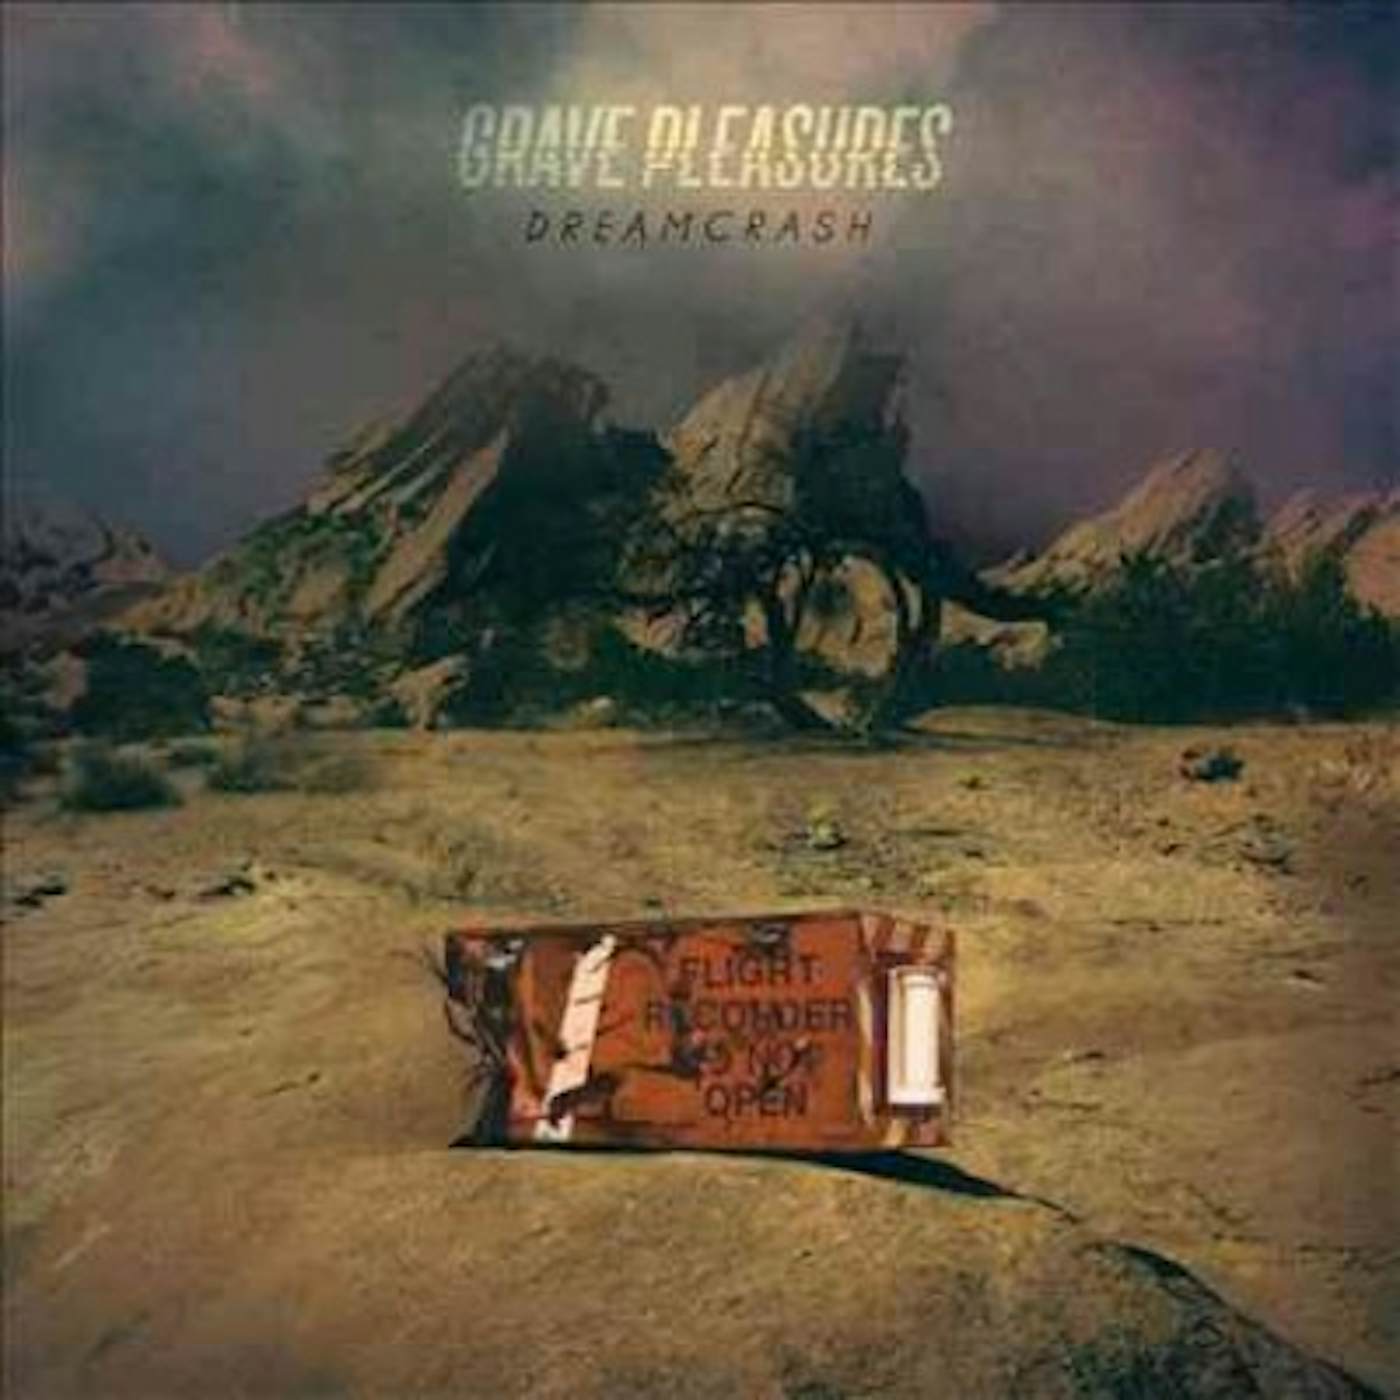 Grave Pleasures Dreamcrash Vinyl Record